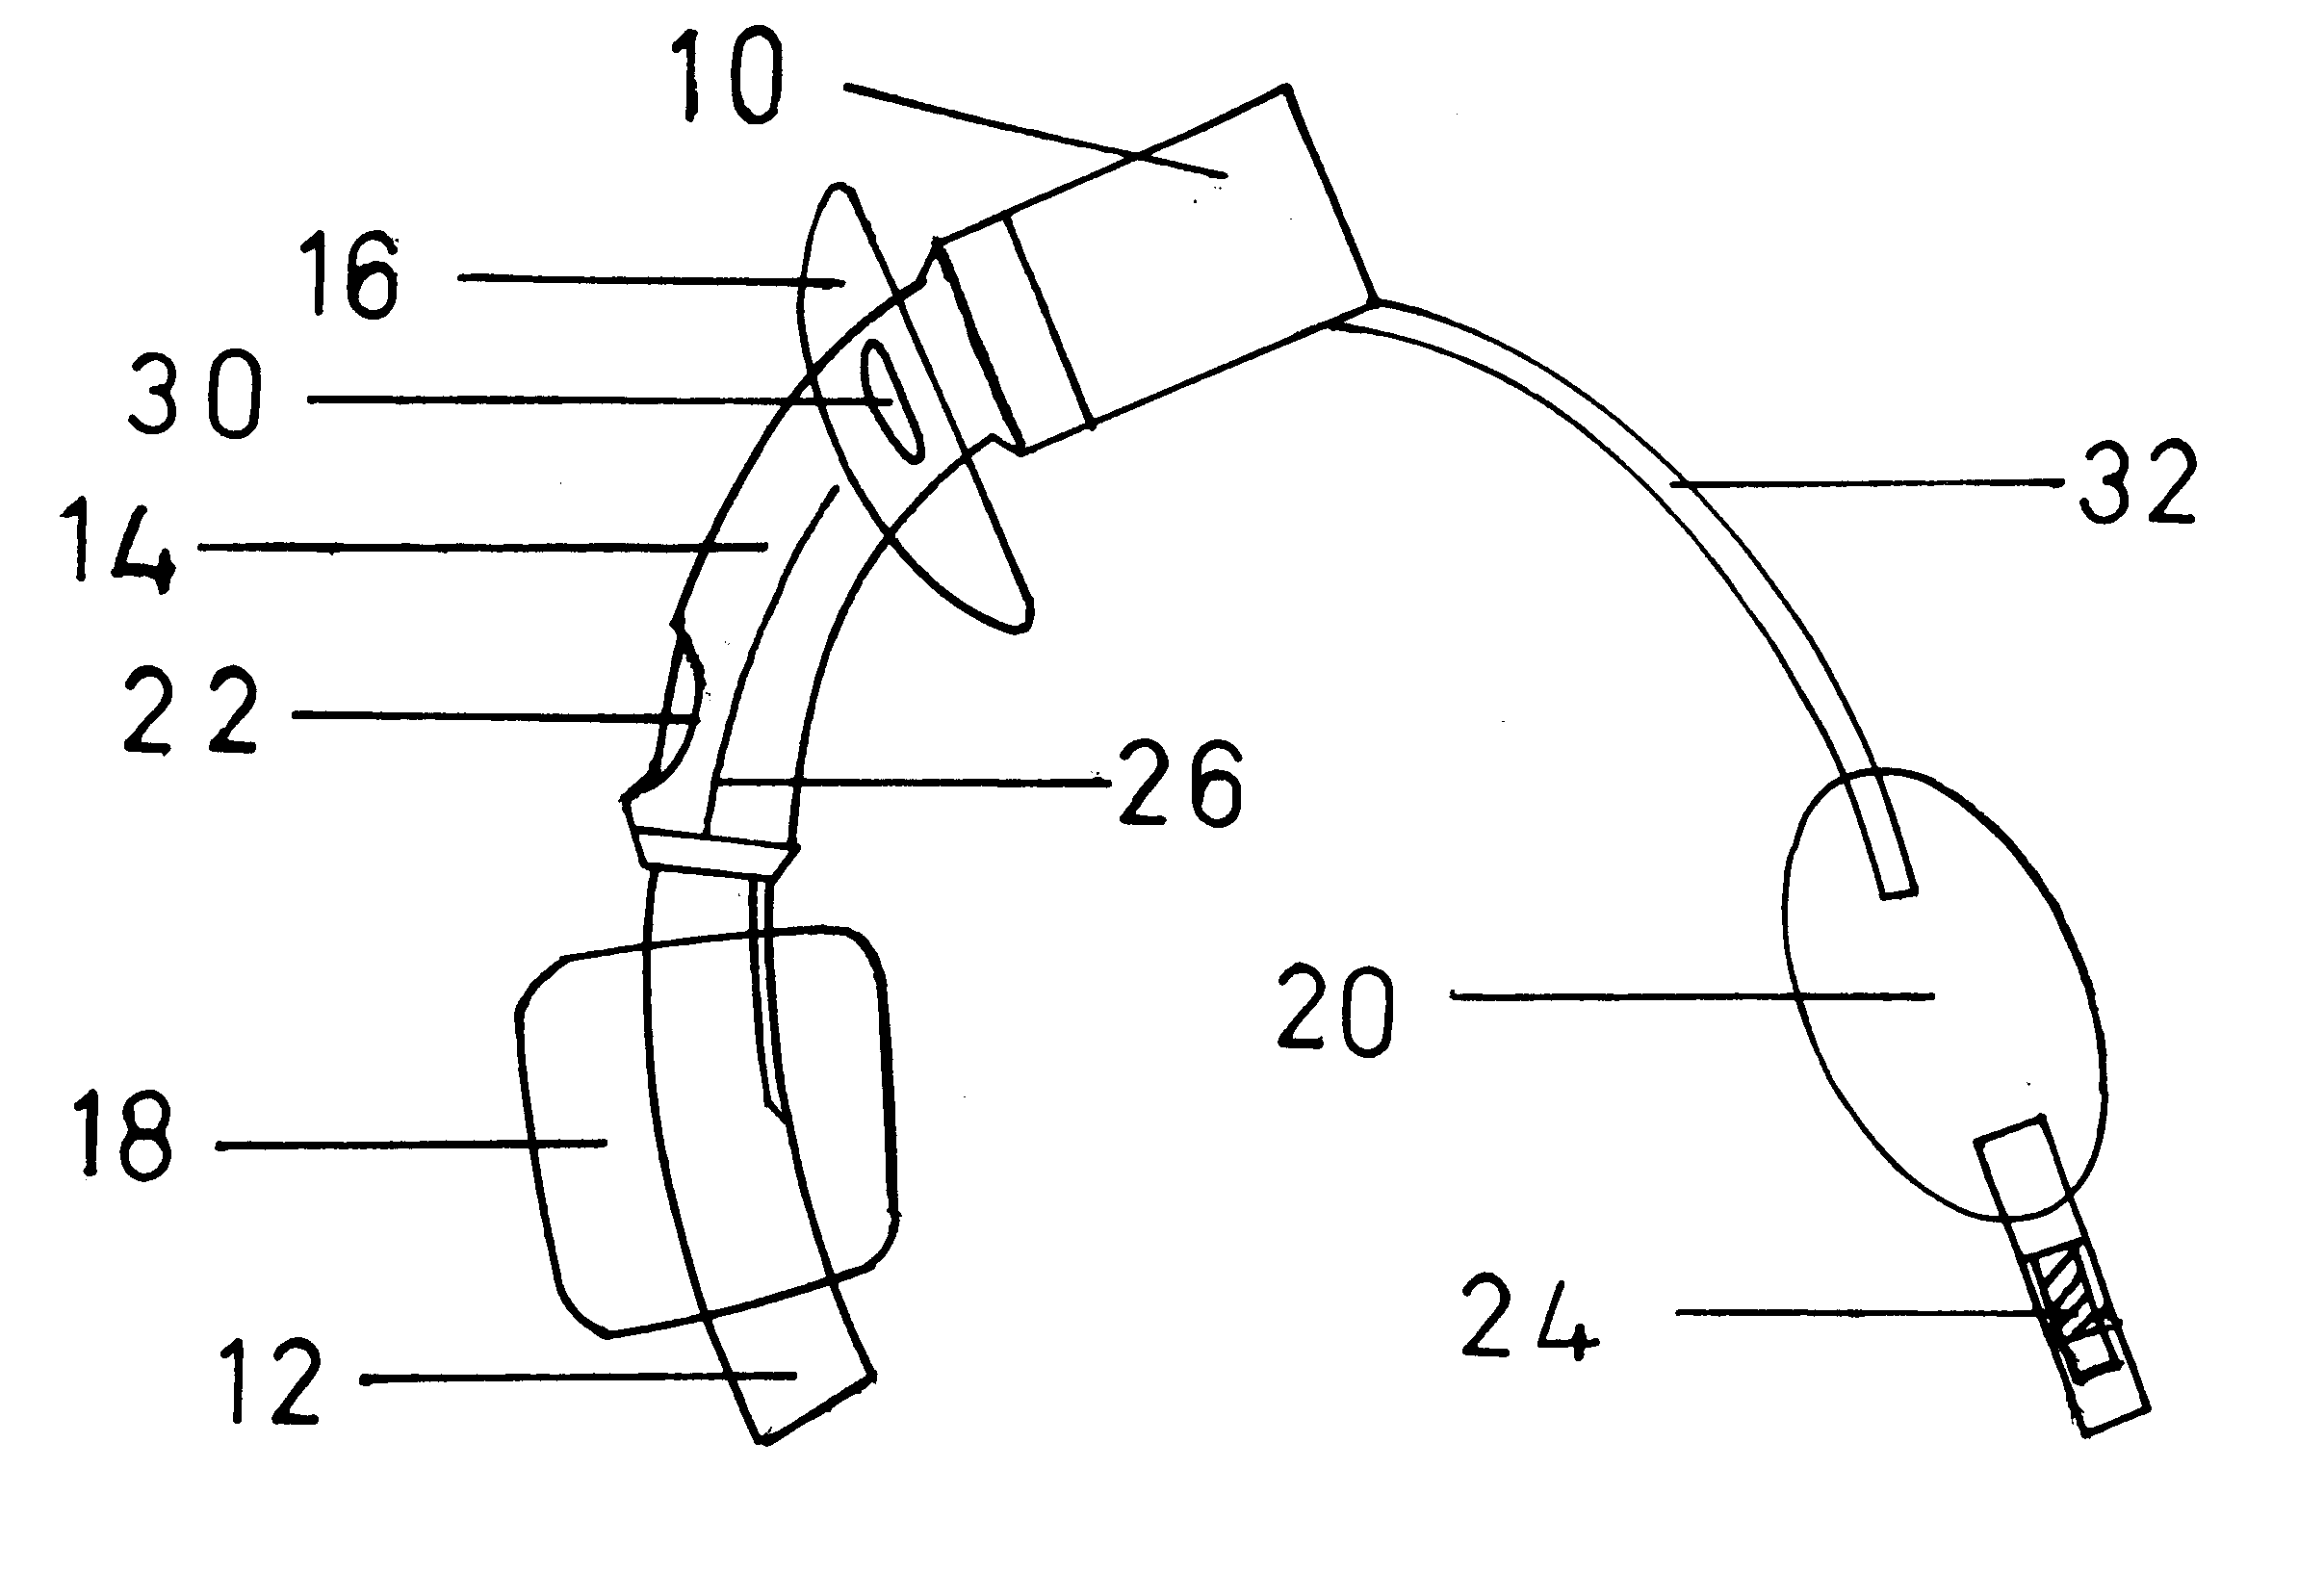 Tracheostomy tube with cuff on inner cannula